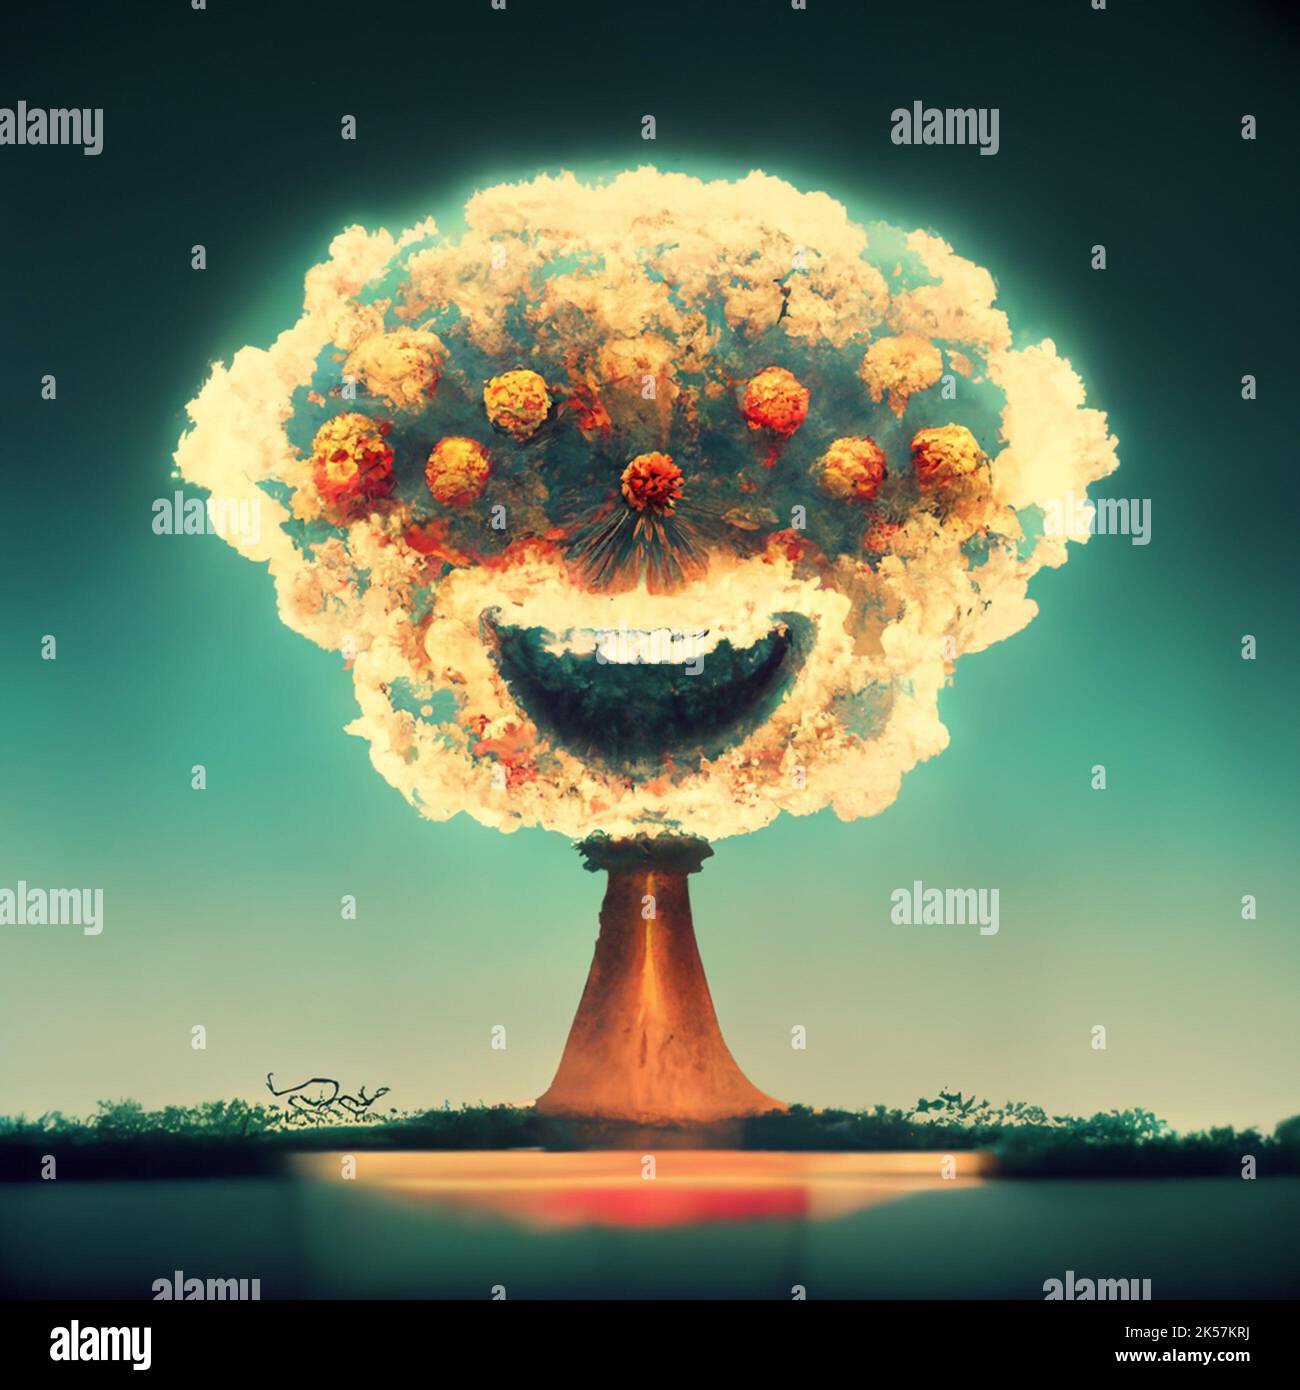 intelligent smiling atomic bomb cartoon style vignette illustration Stock Photo